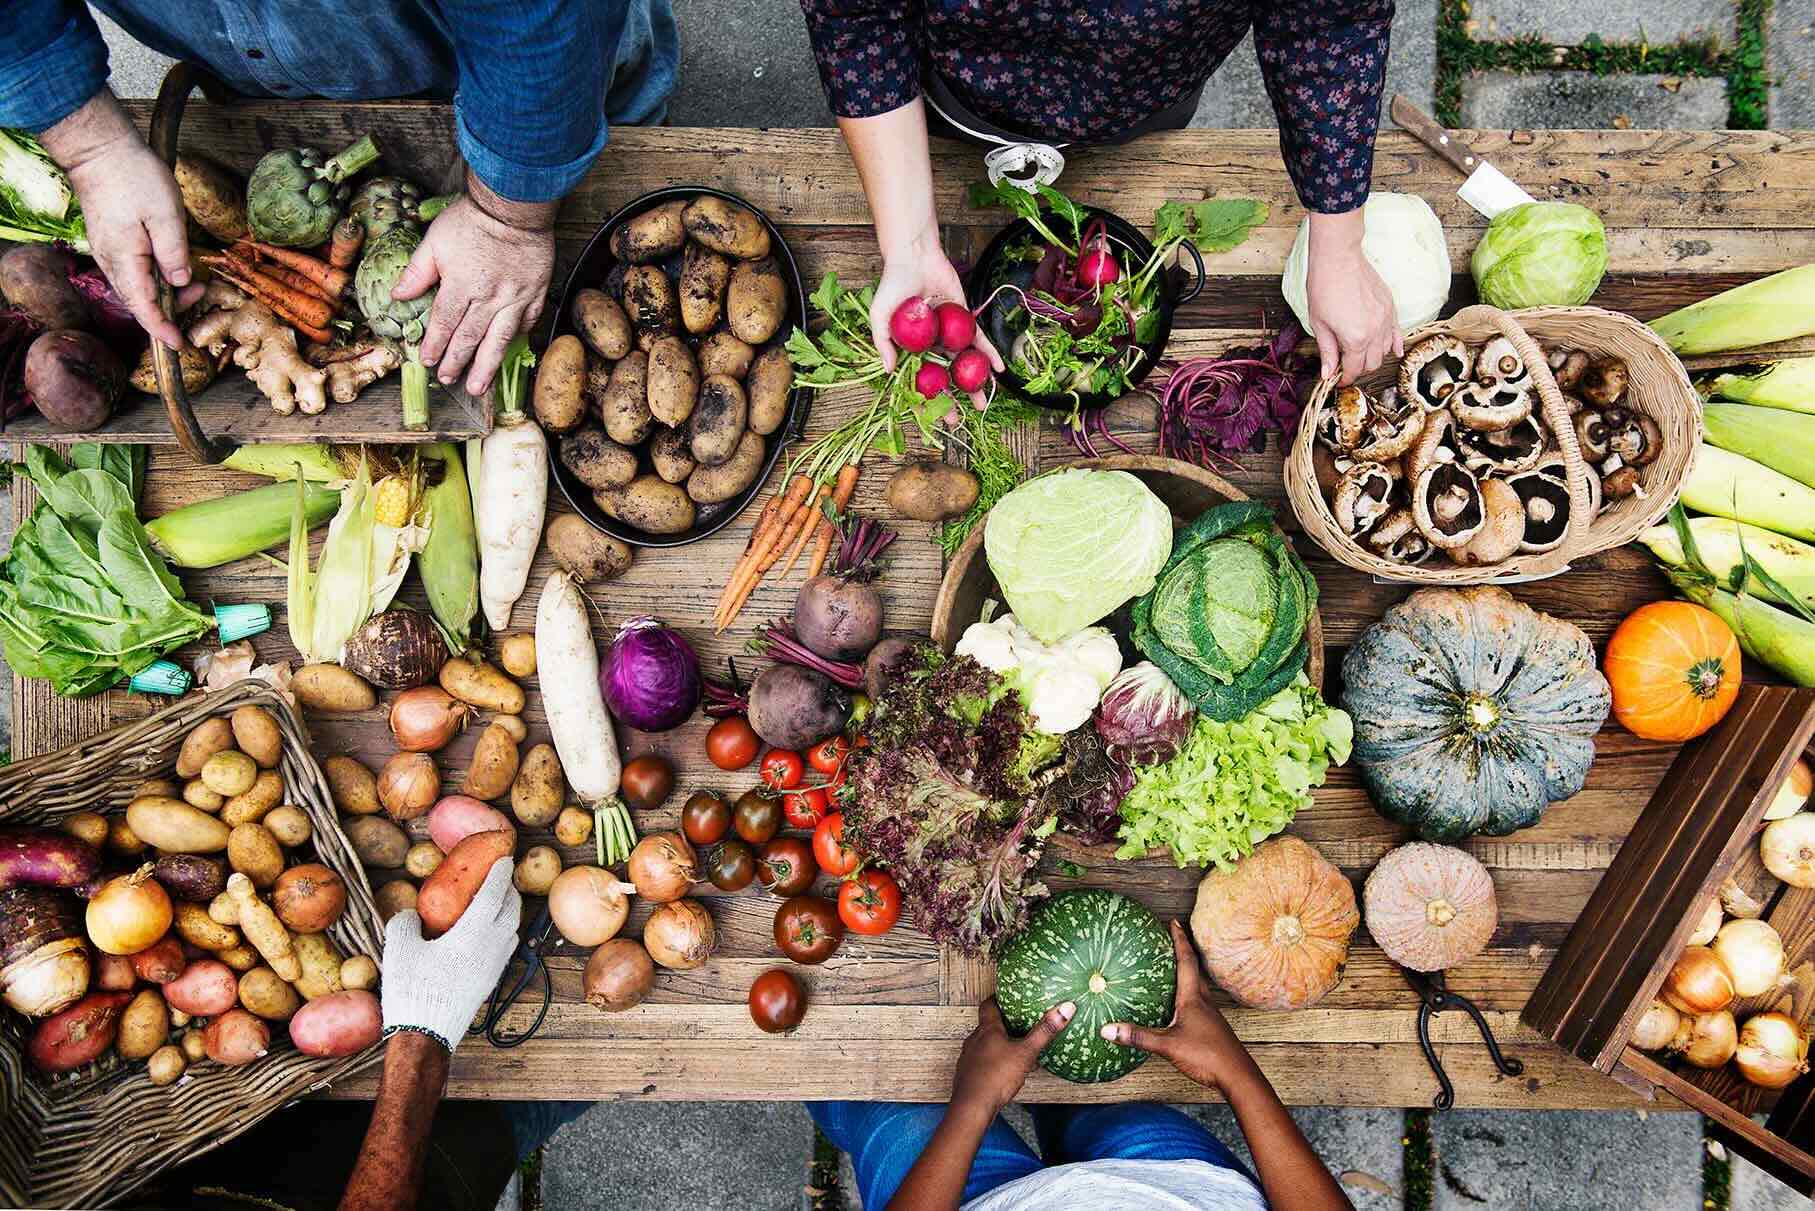 Fruits et légumes sur une table - Fruits and vegetables on table